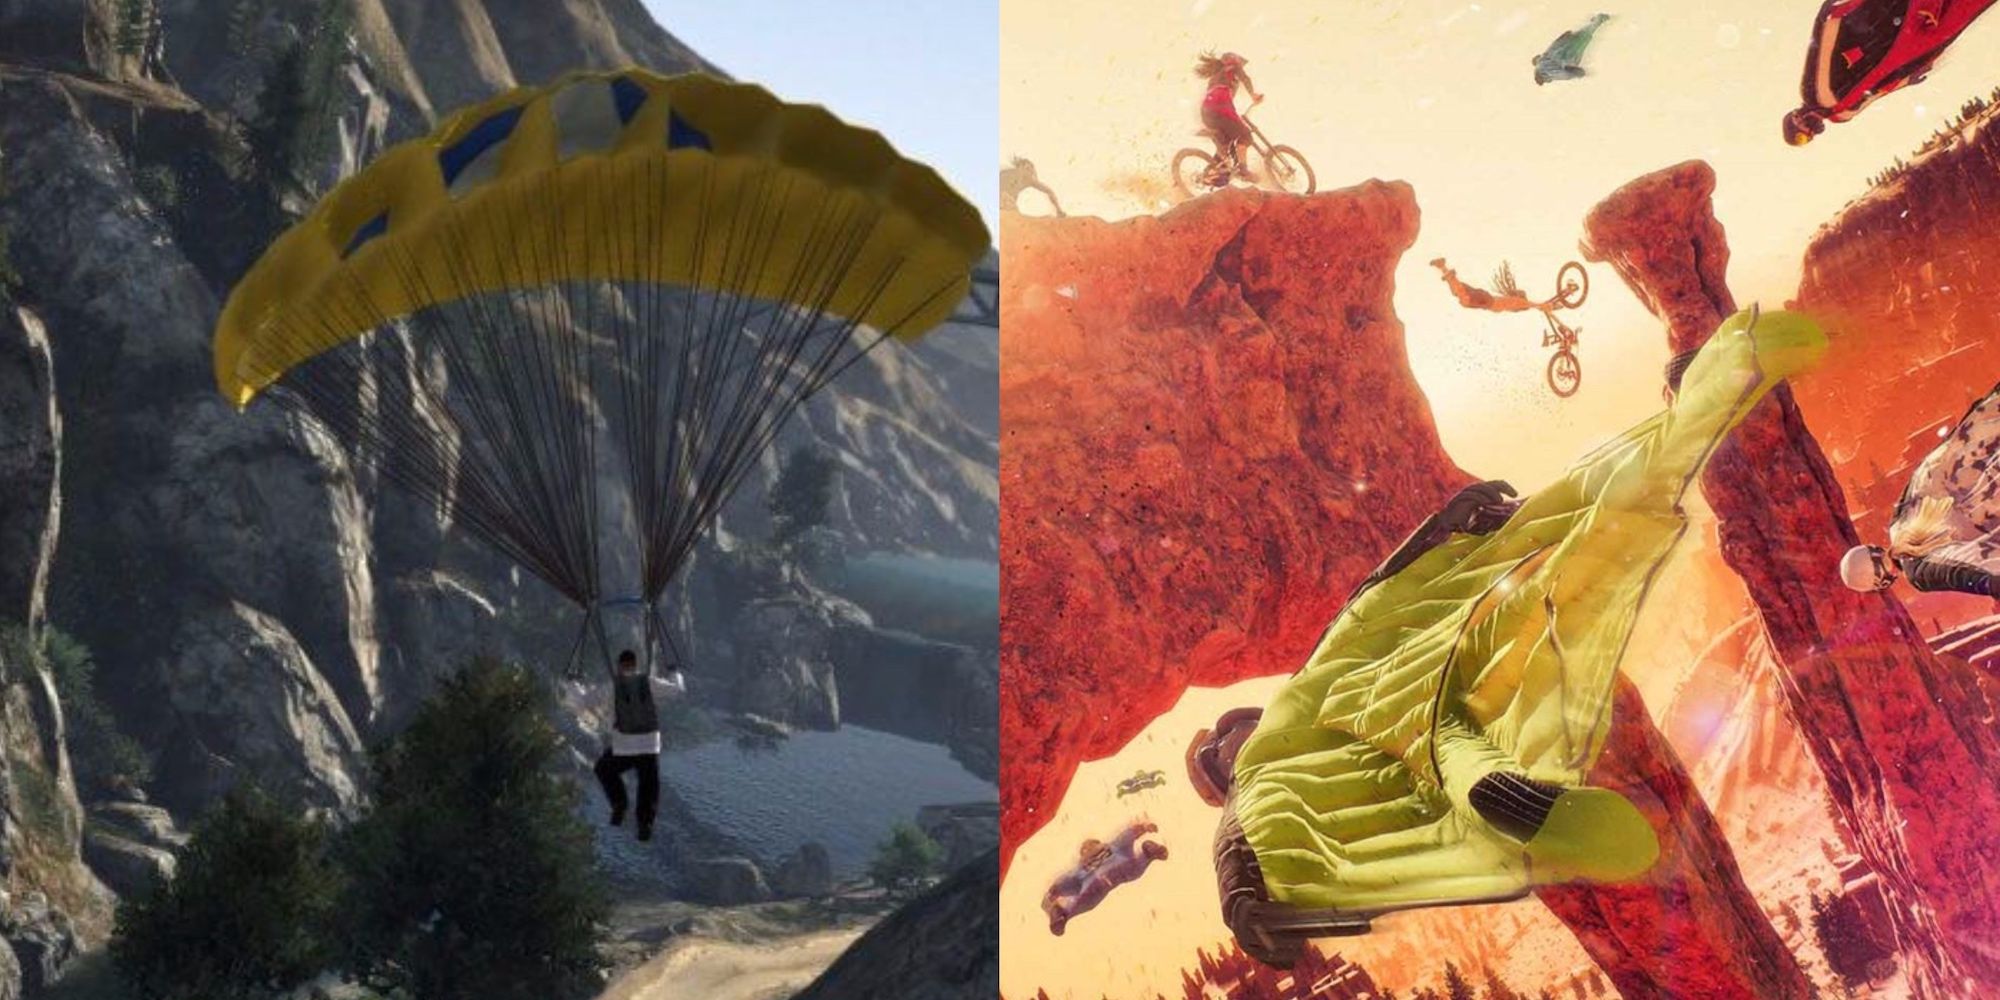 Parachute GTA and rider's republic split image